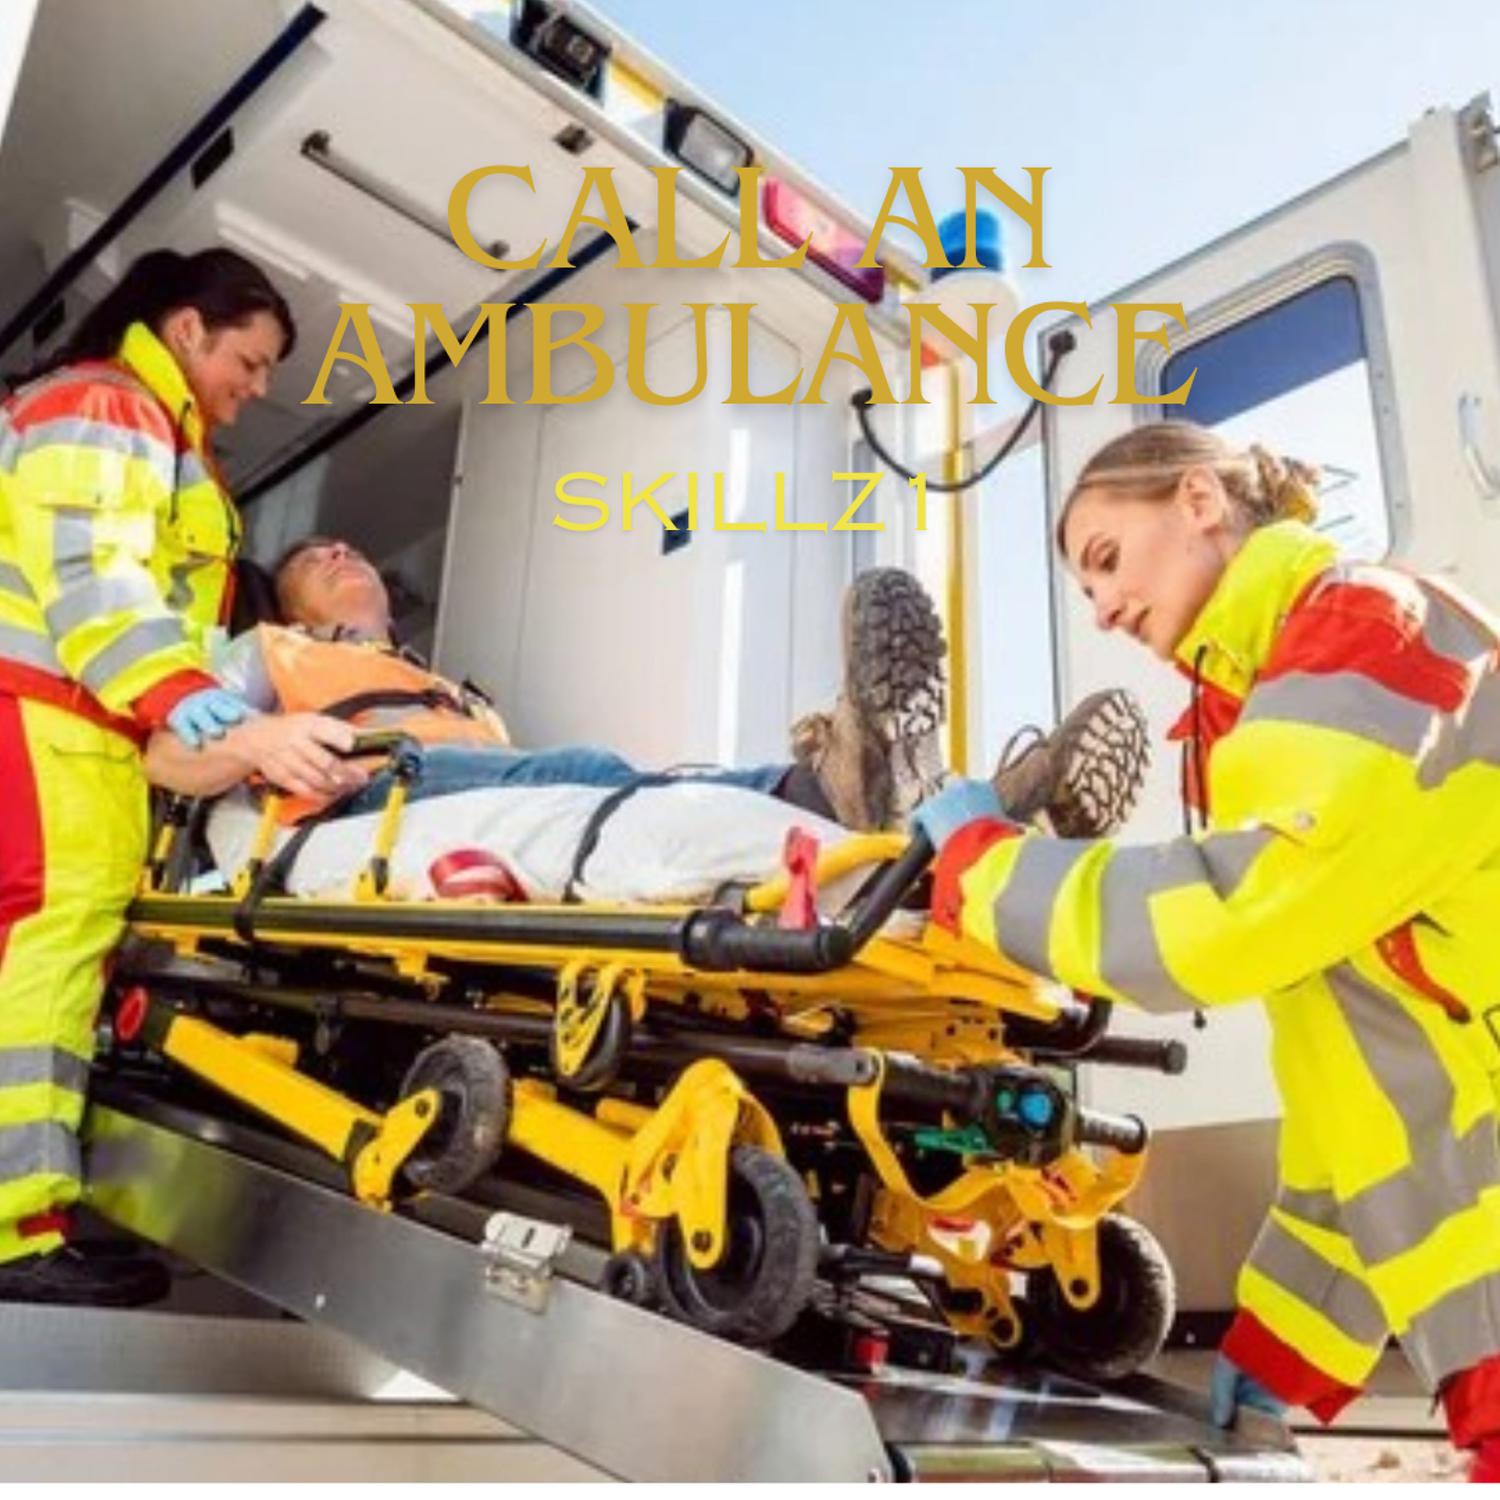 Skillz1 - Call an Ambulance